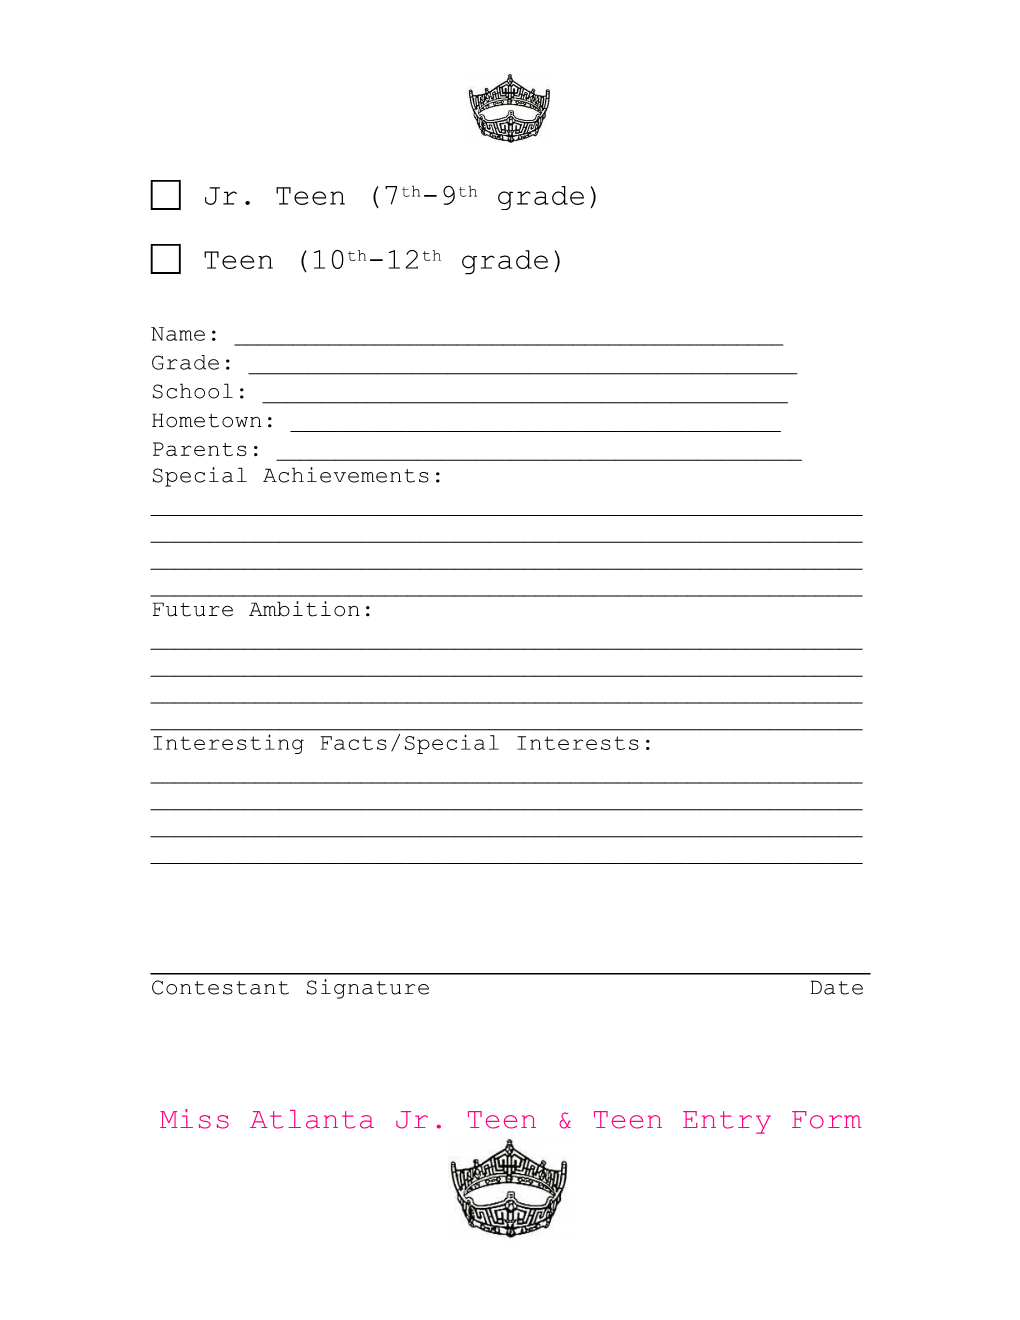 Miss Atlanta Jr. Teen and Teen Pageants